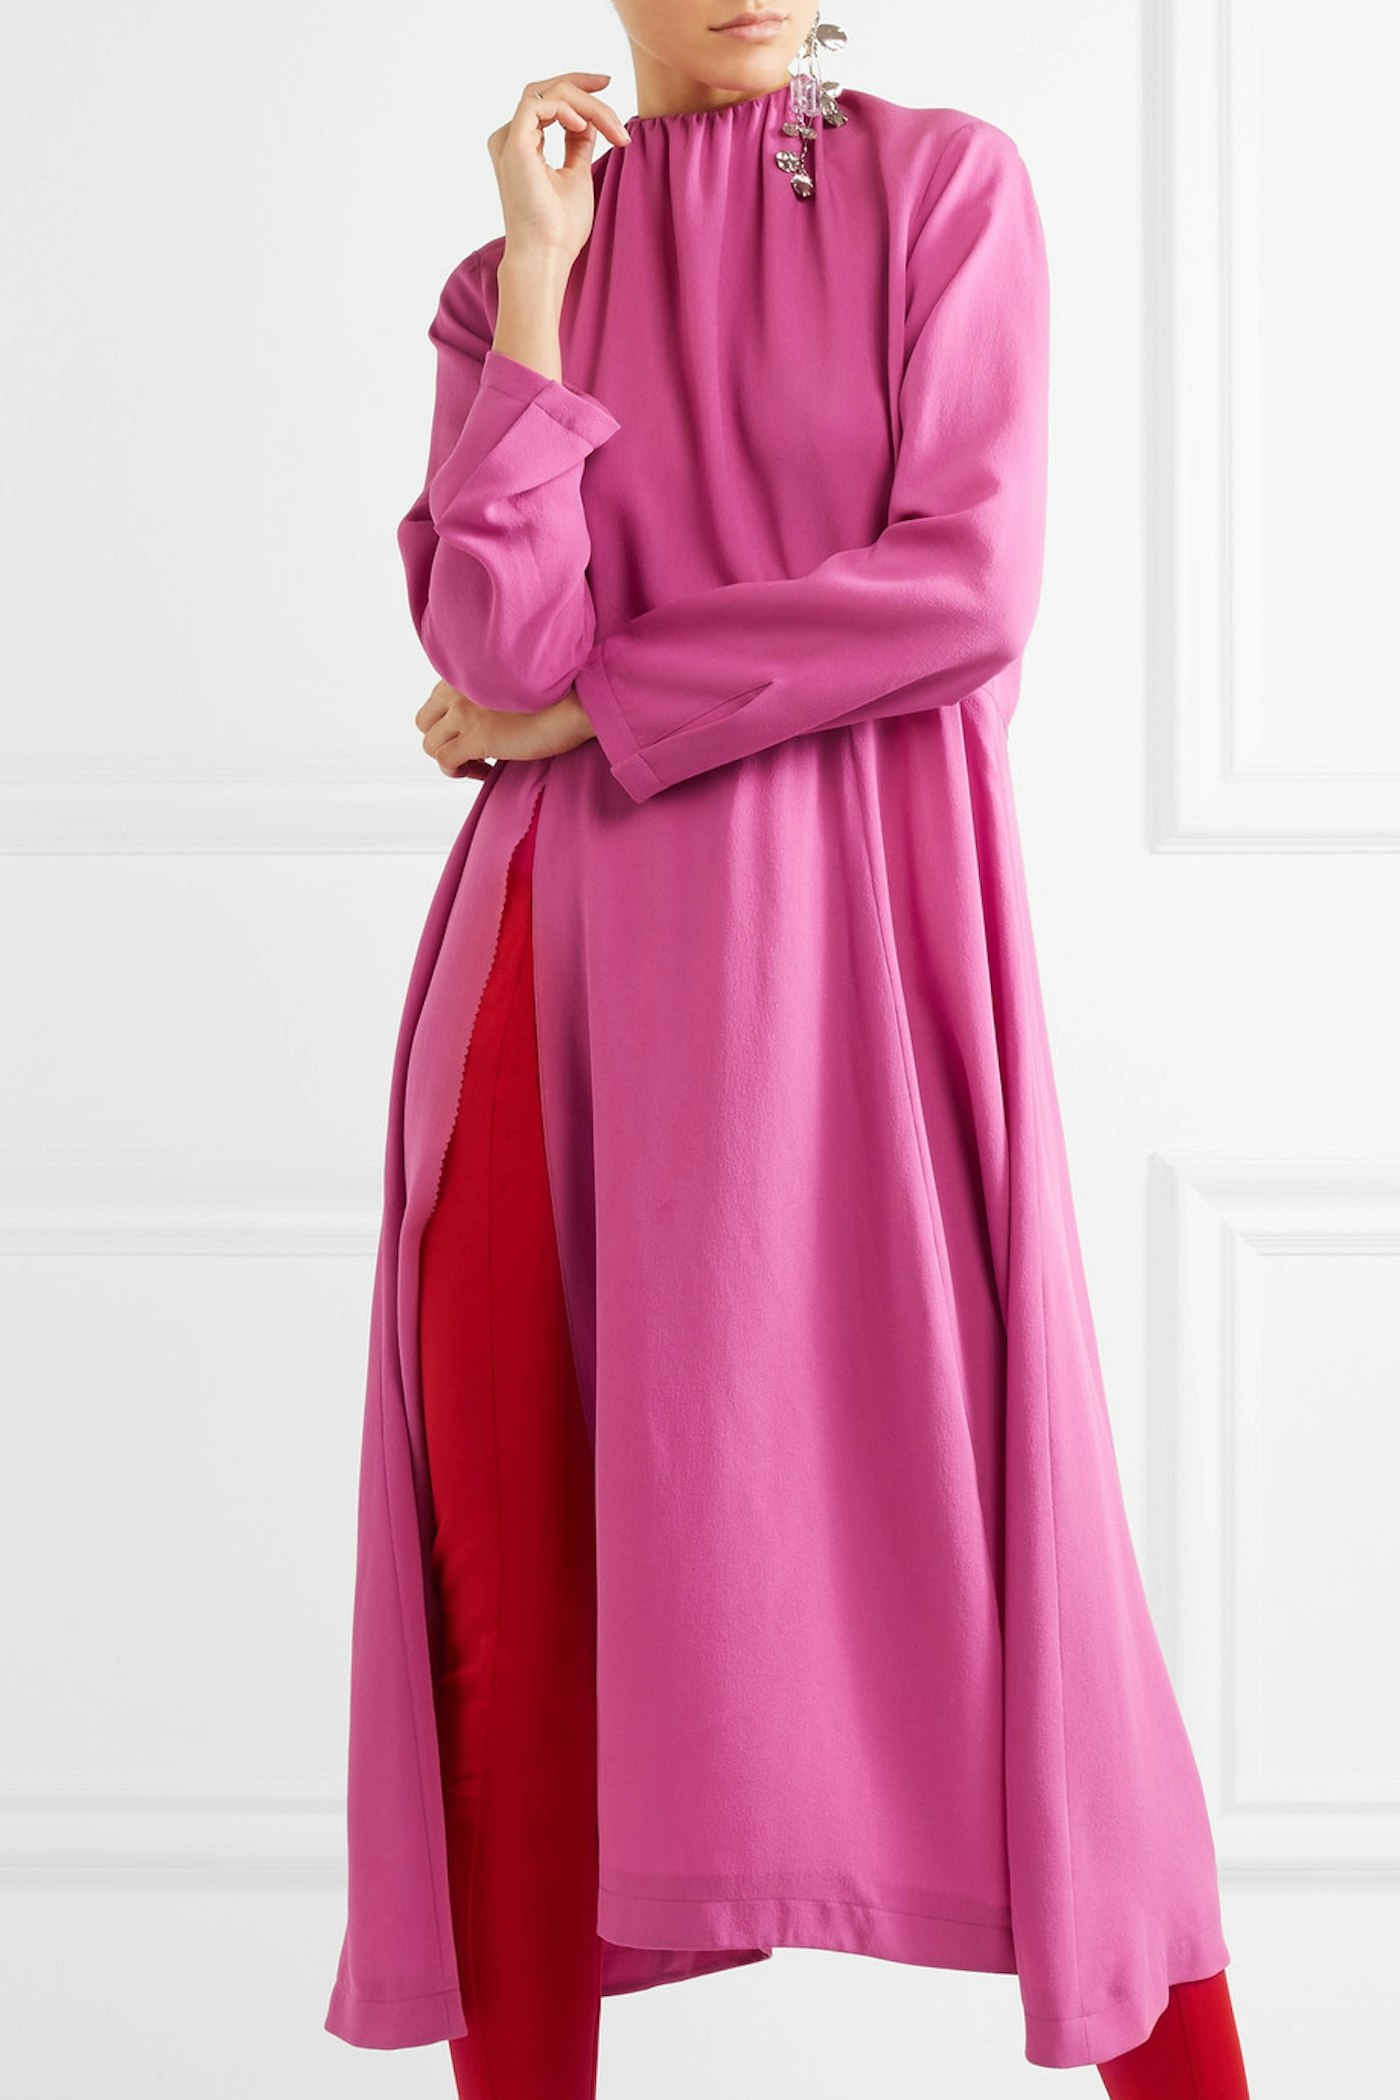 Balanciaga Split-side silk-georgette midi dress, £1195